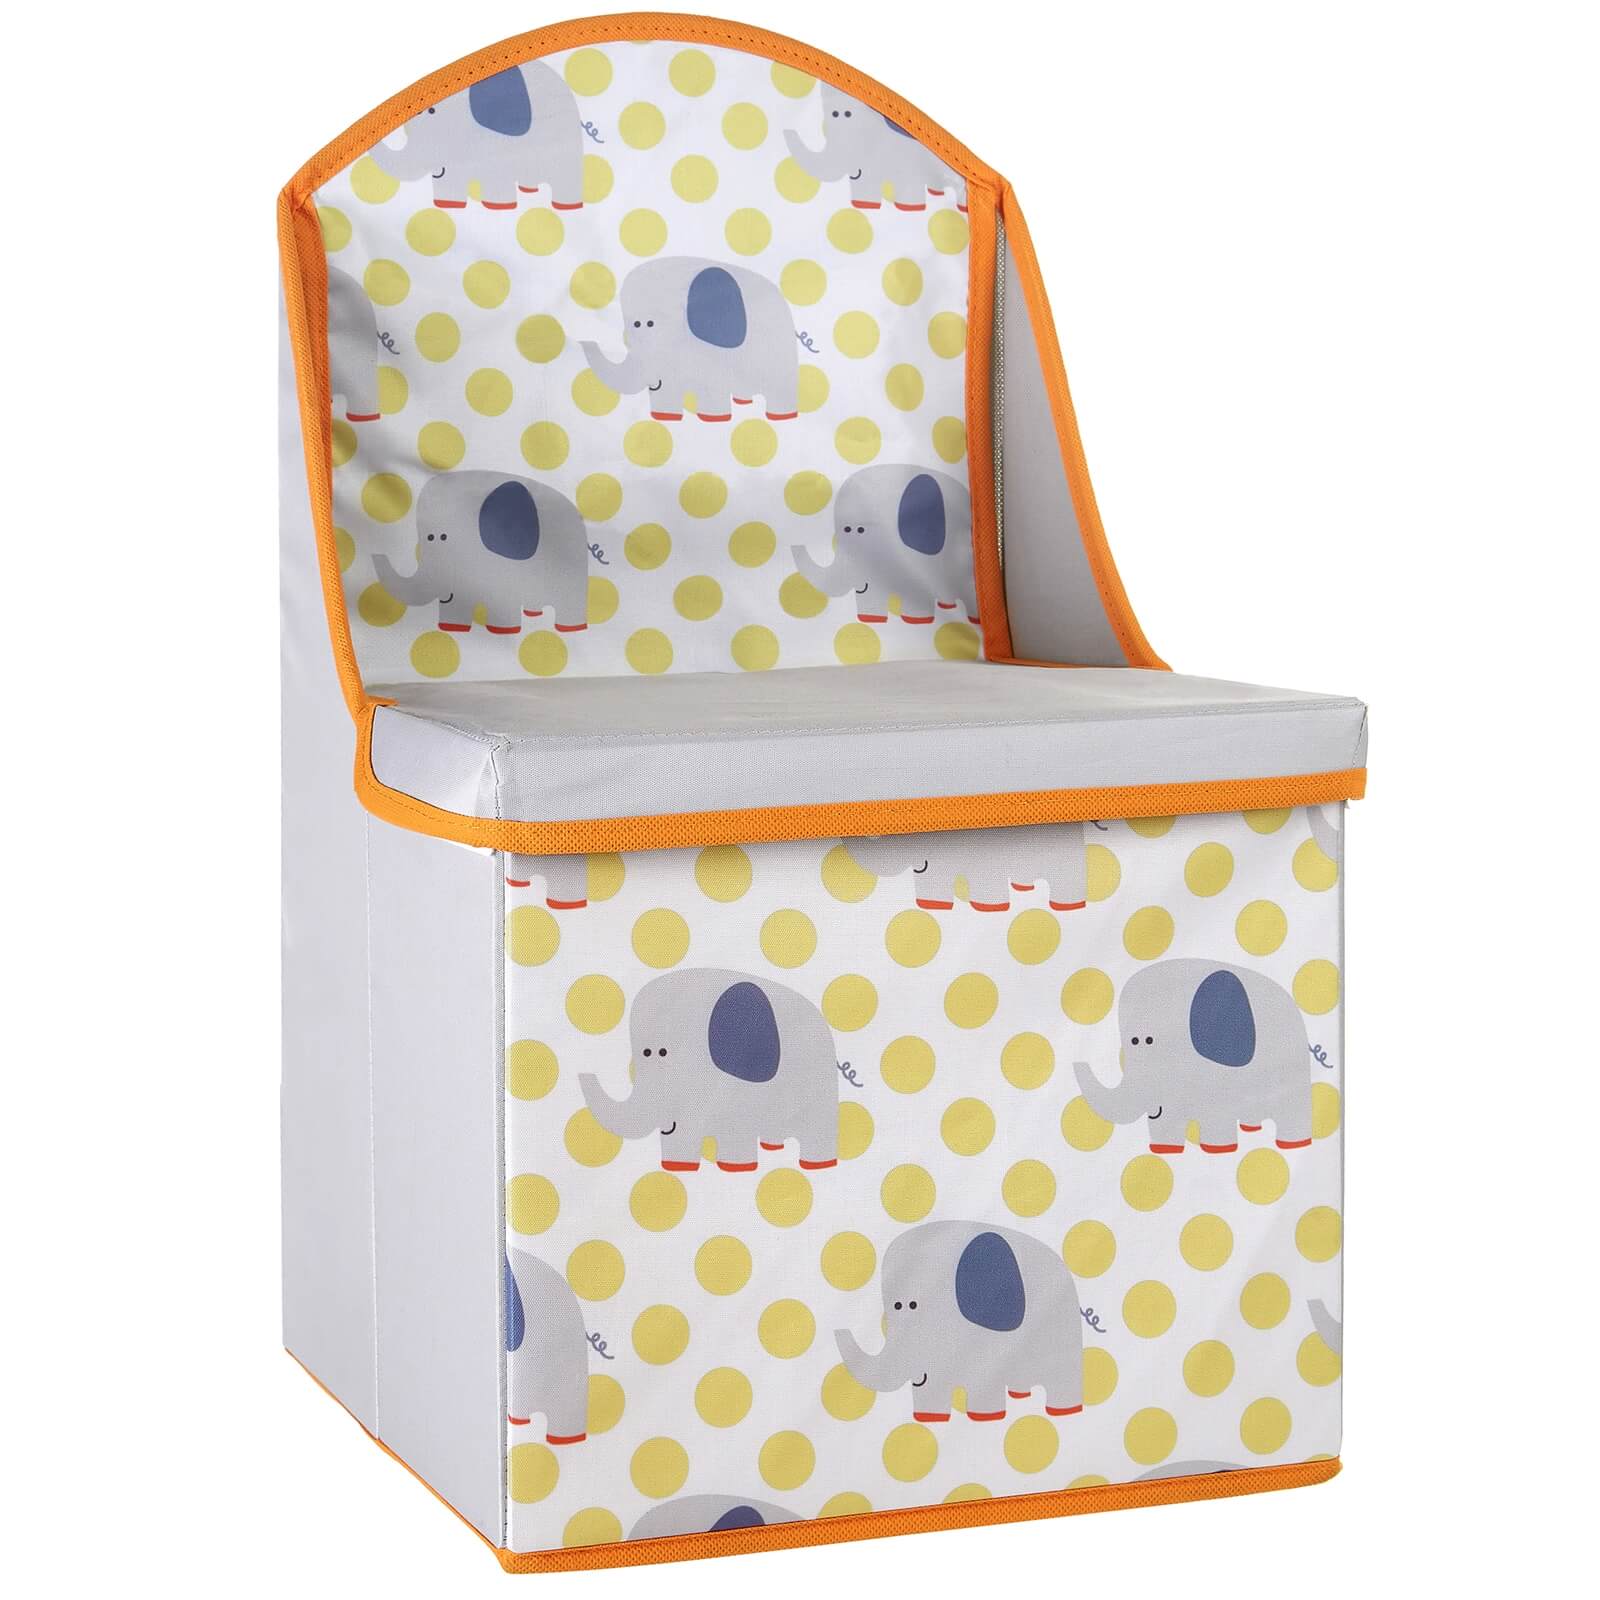 Kids Storage Box Seat Elephant Design